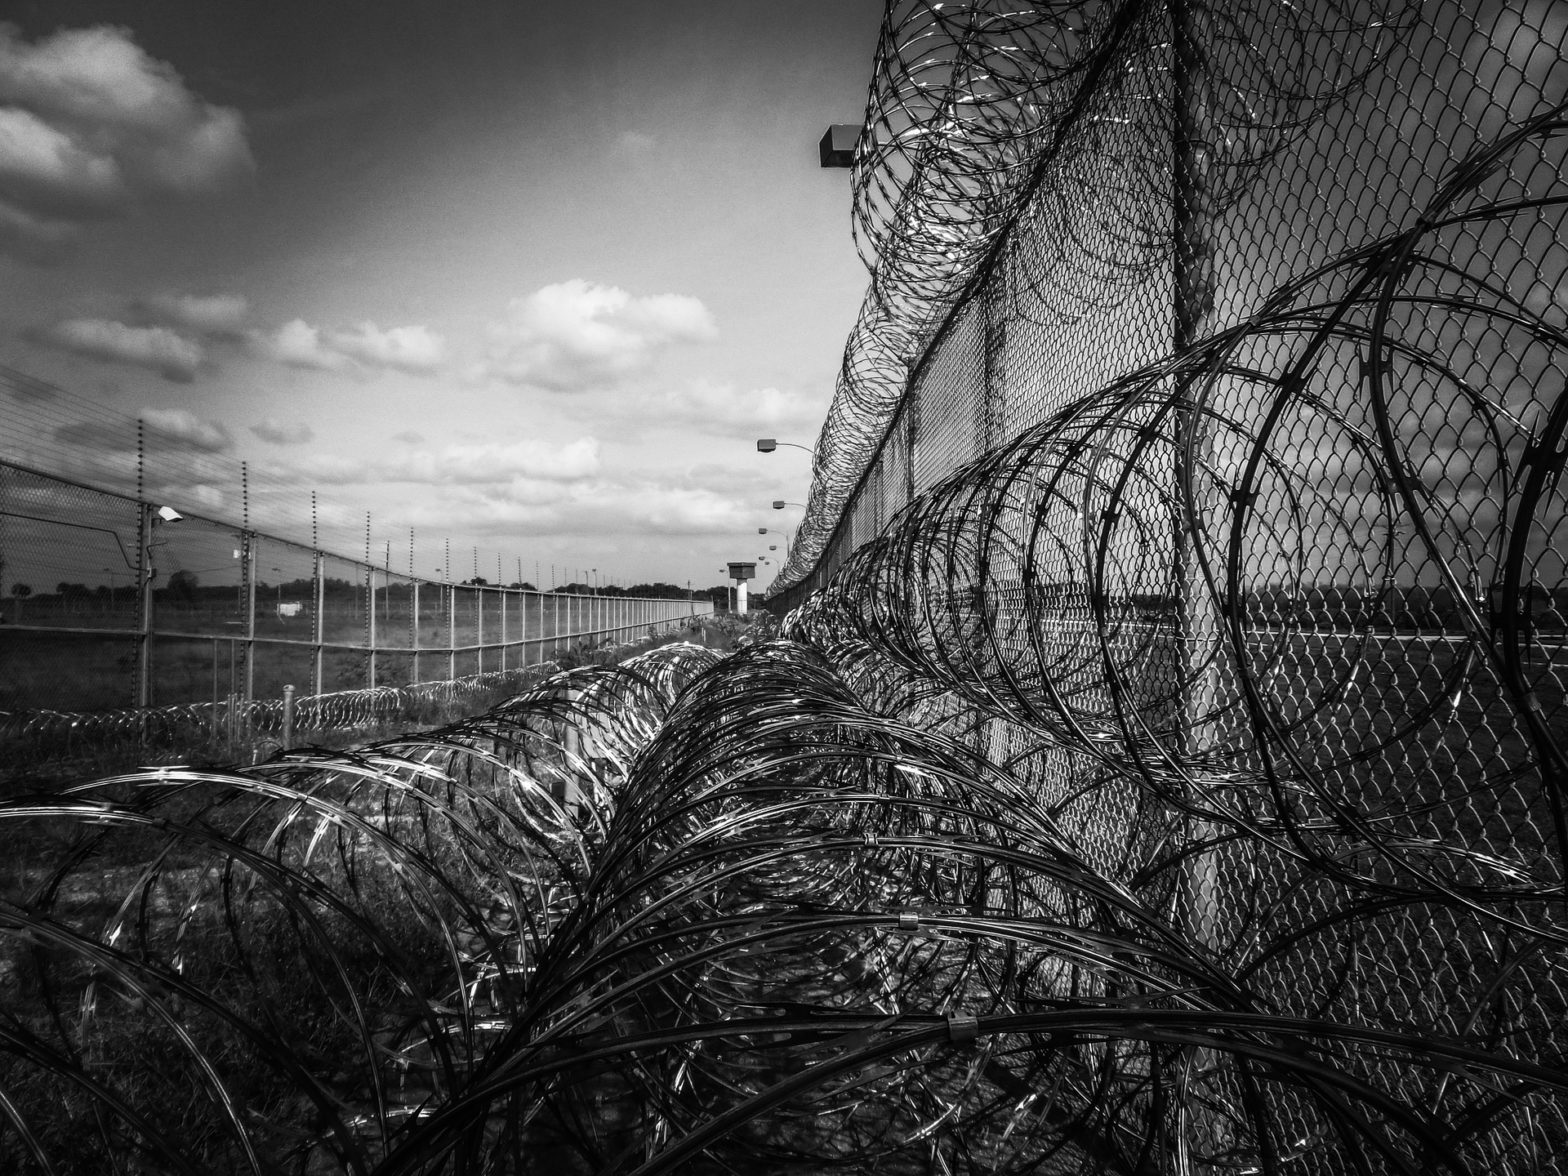 image of prison fence